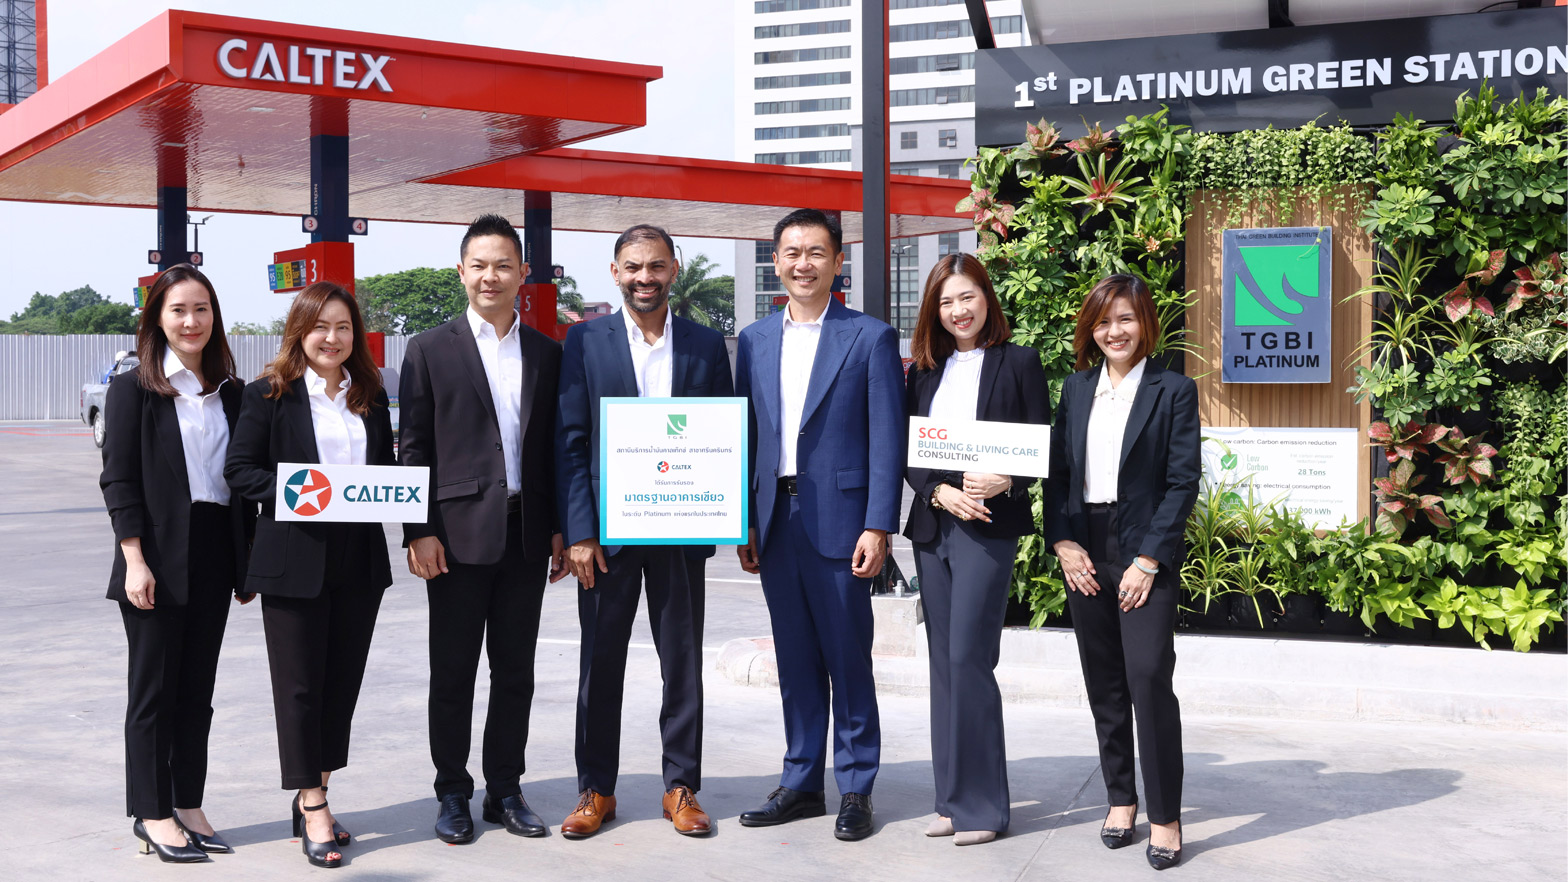 The Caltex Srinakarin service station team displays their Platinum Level Green Building certification.